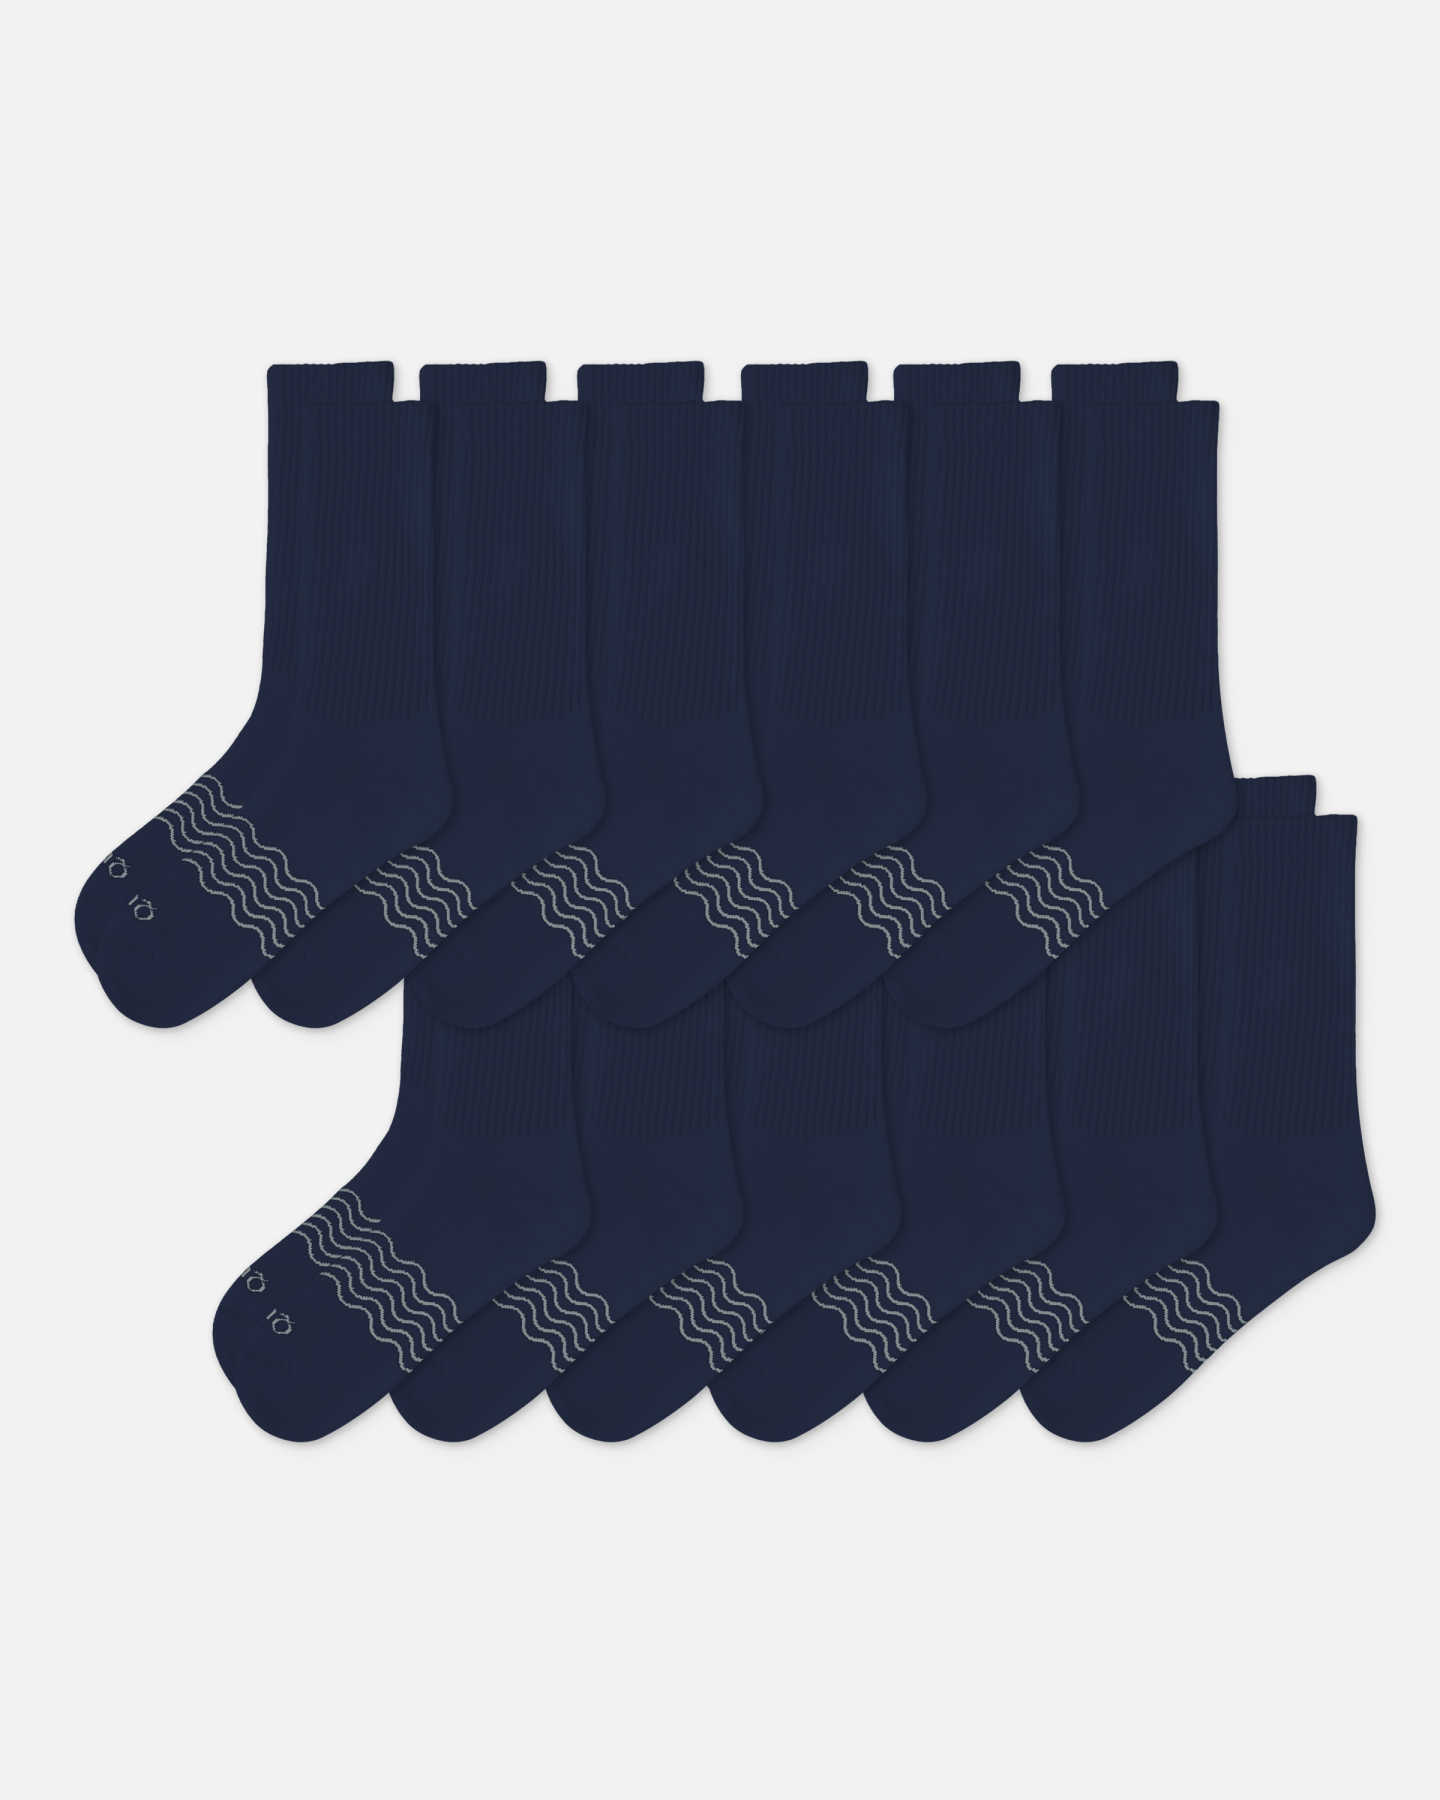 Merino Crew Socks (12-Pack) - Charcoal